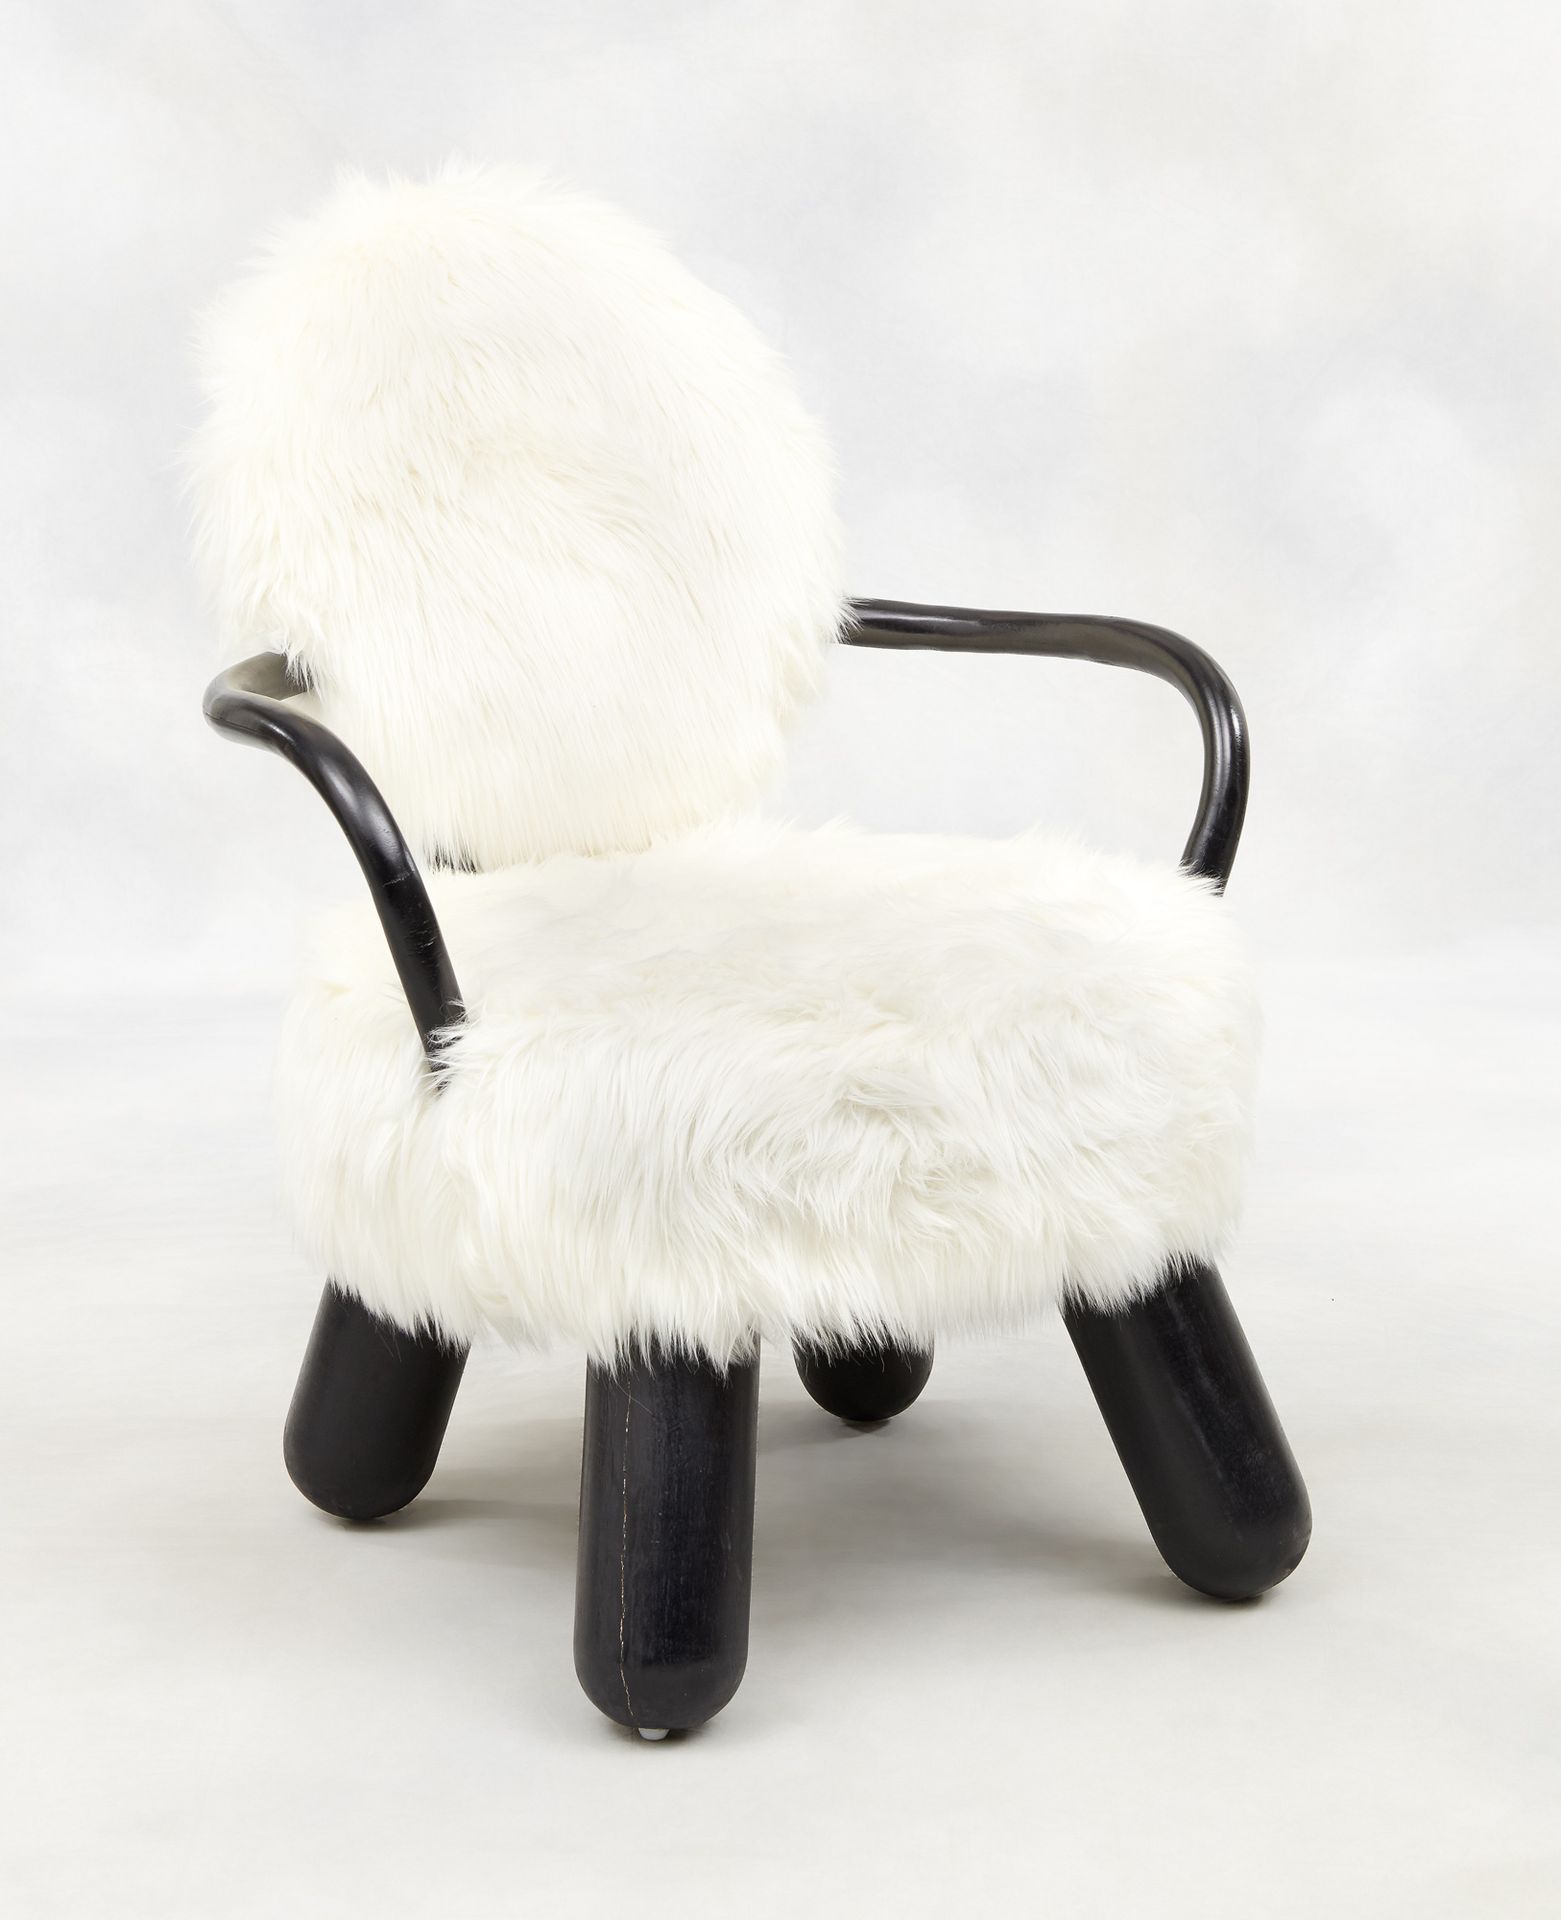 Olivier DE SCHRIJVER École belge (1958) 家具：一对黑化木和白色合成毛皮的扶手椅，型号为 "威廉"。